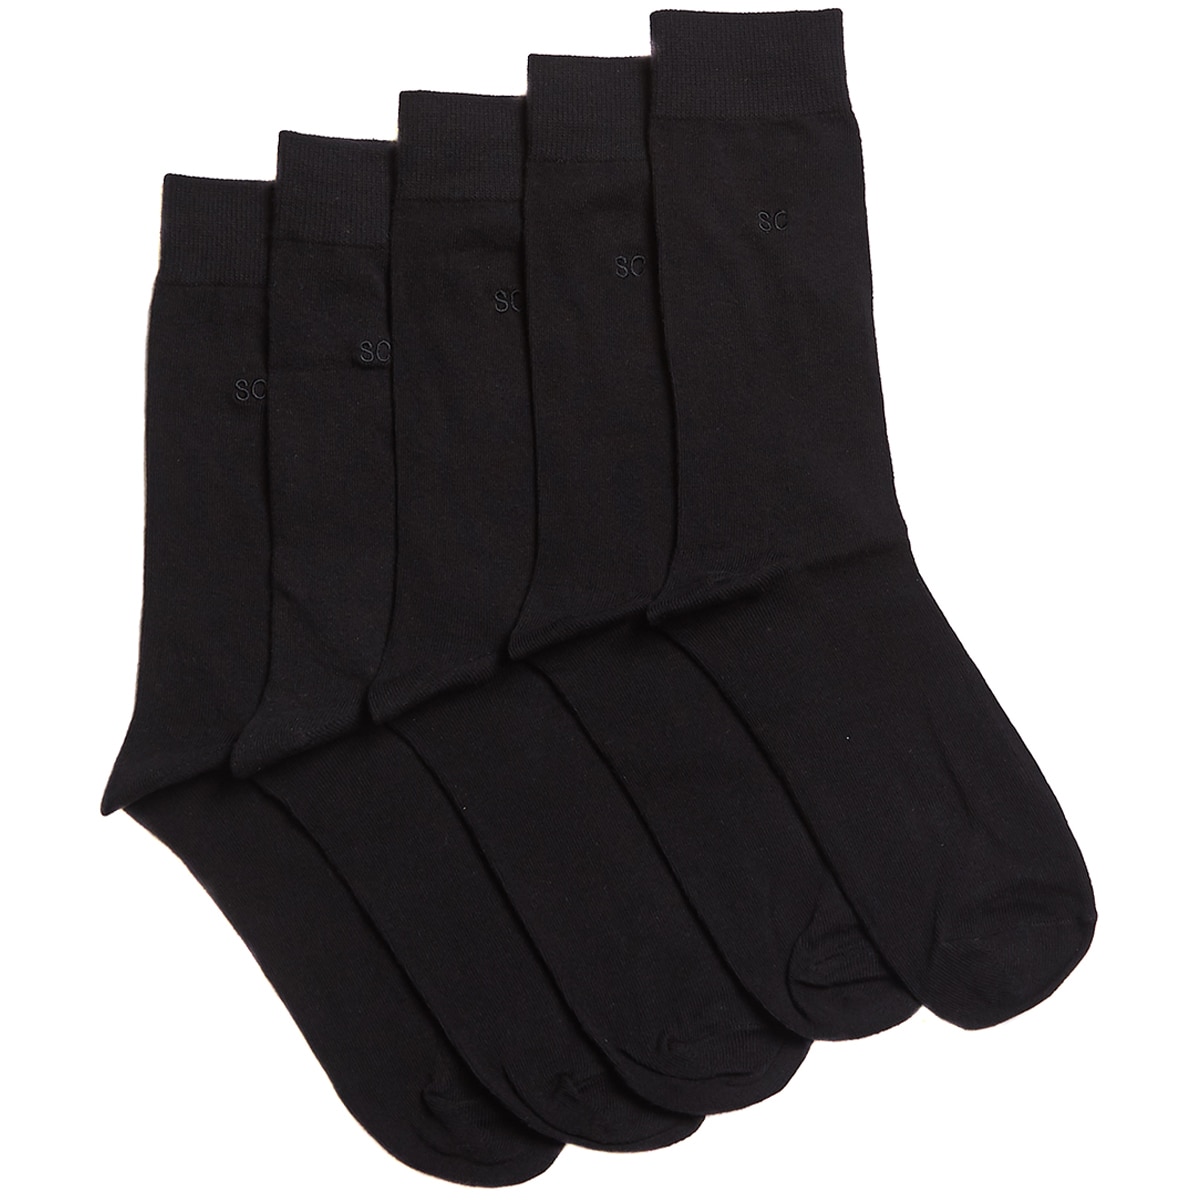 Sportscraft Dress Sock 5 Pack - Black